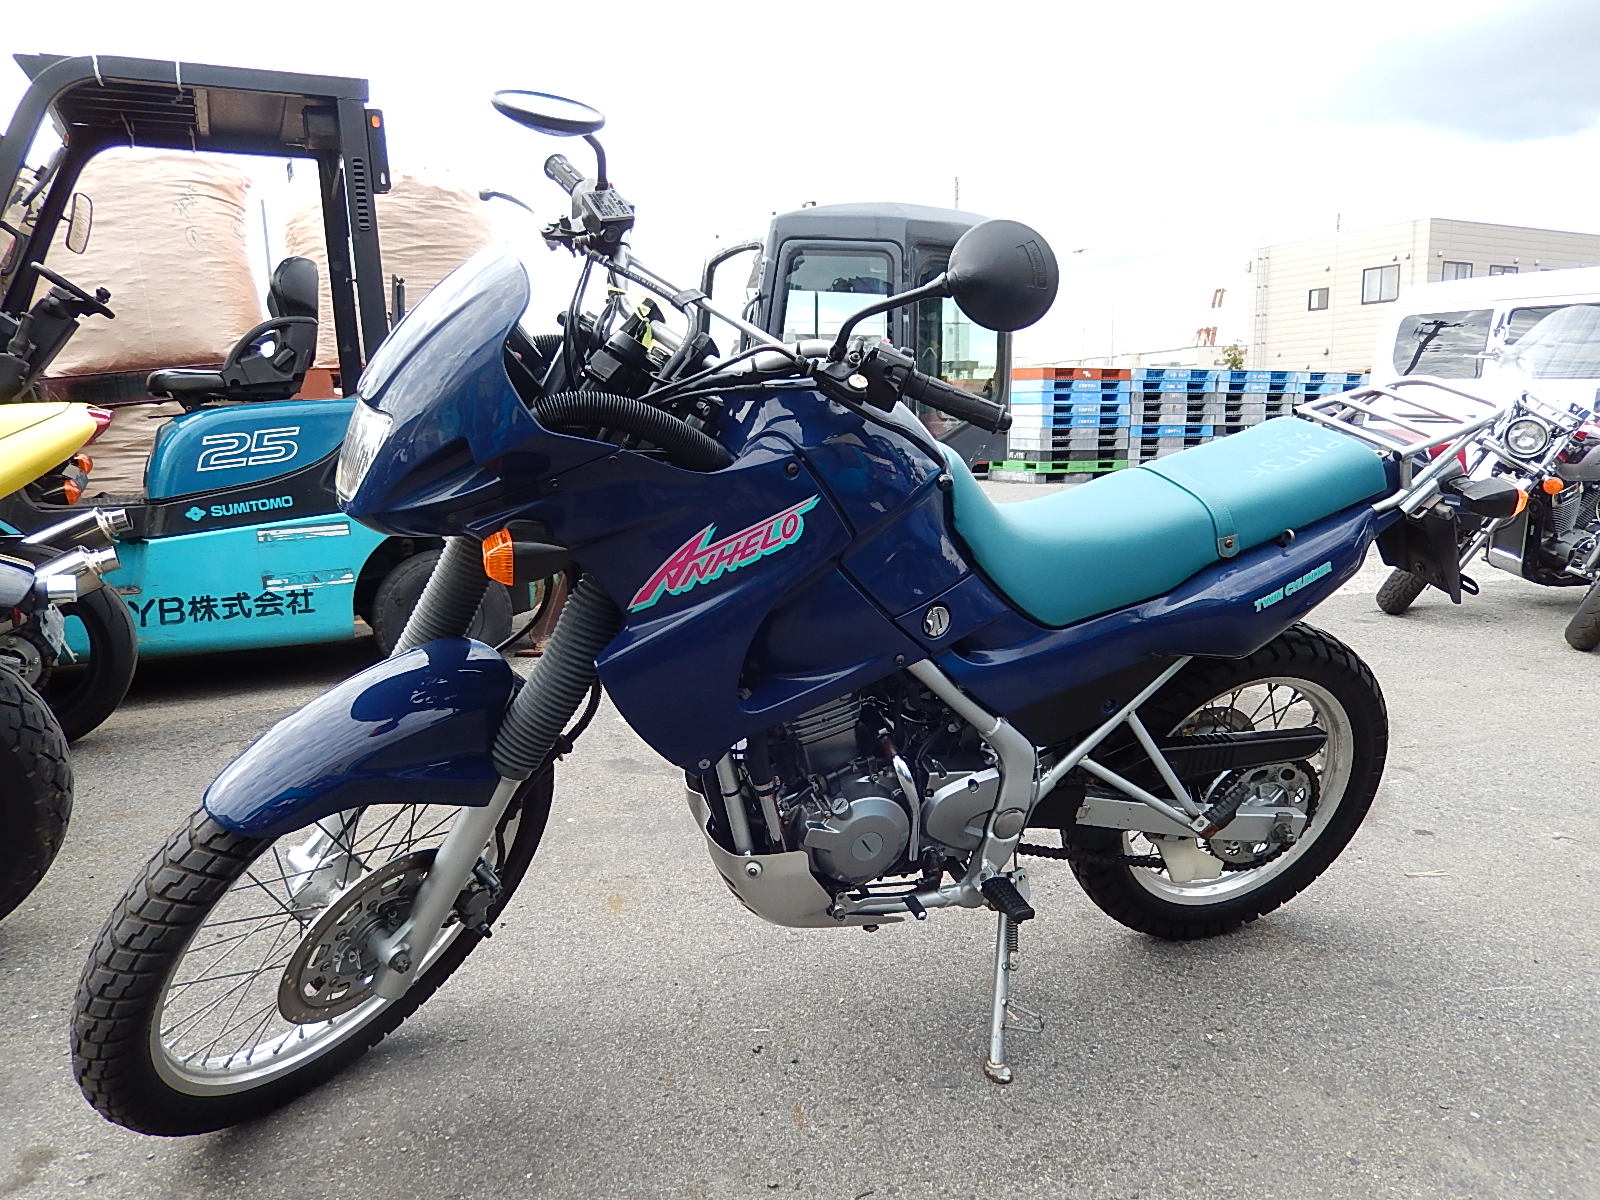 Kawasaki kle 250 anhelo: обзор мотоцикла, технические характеристики, отзывы